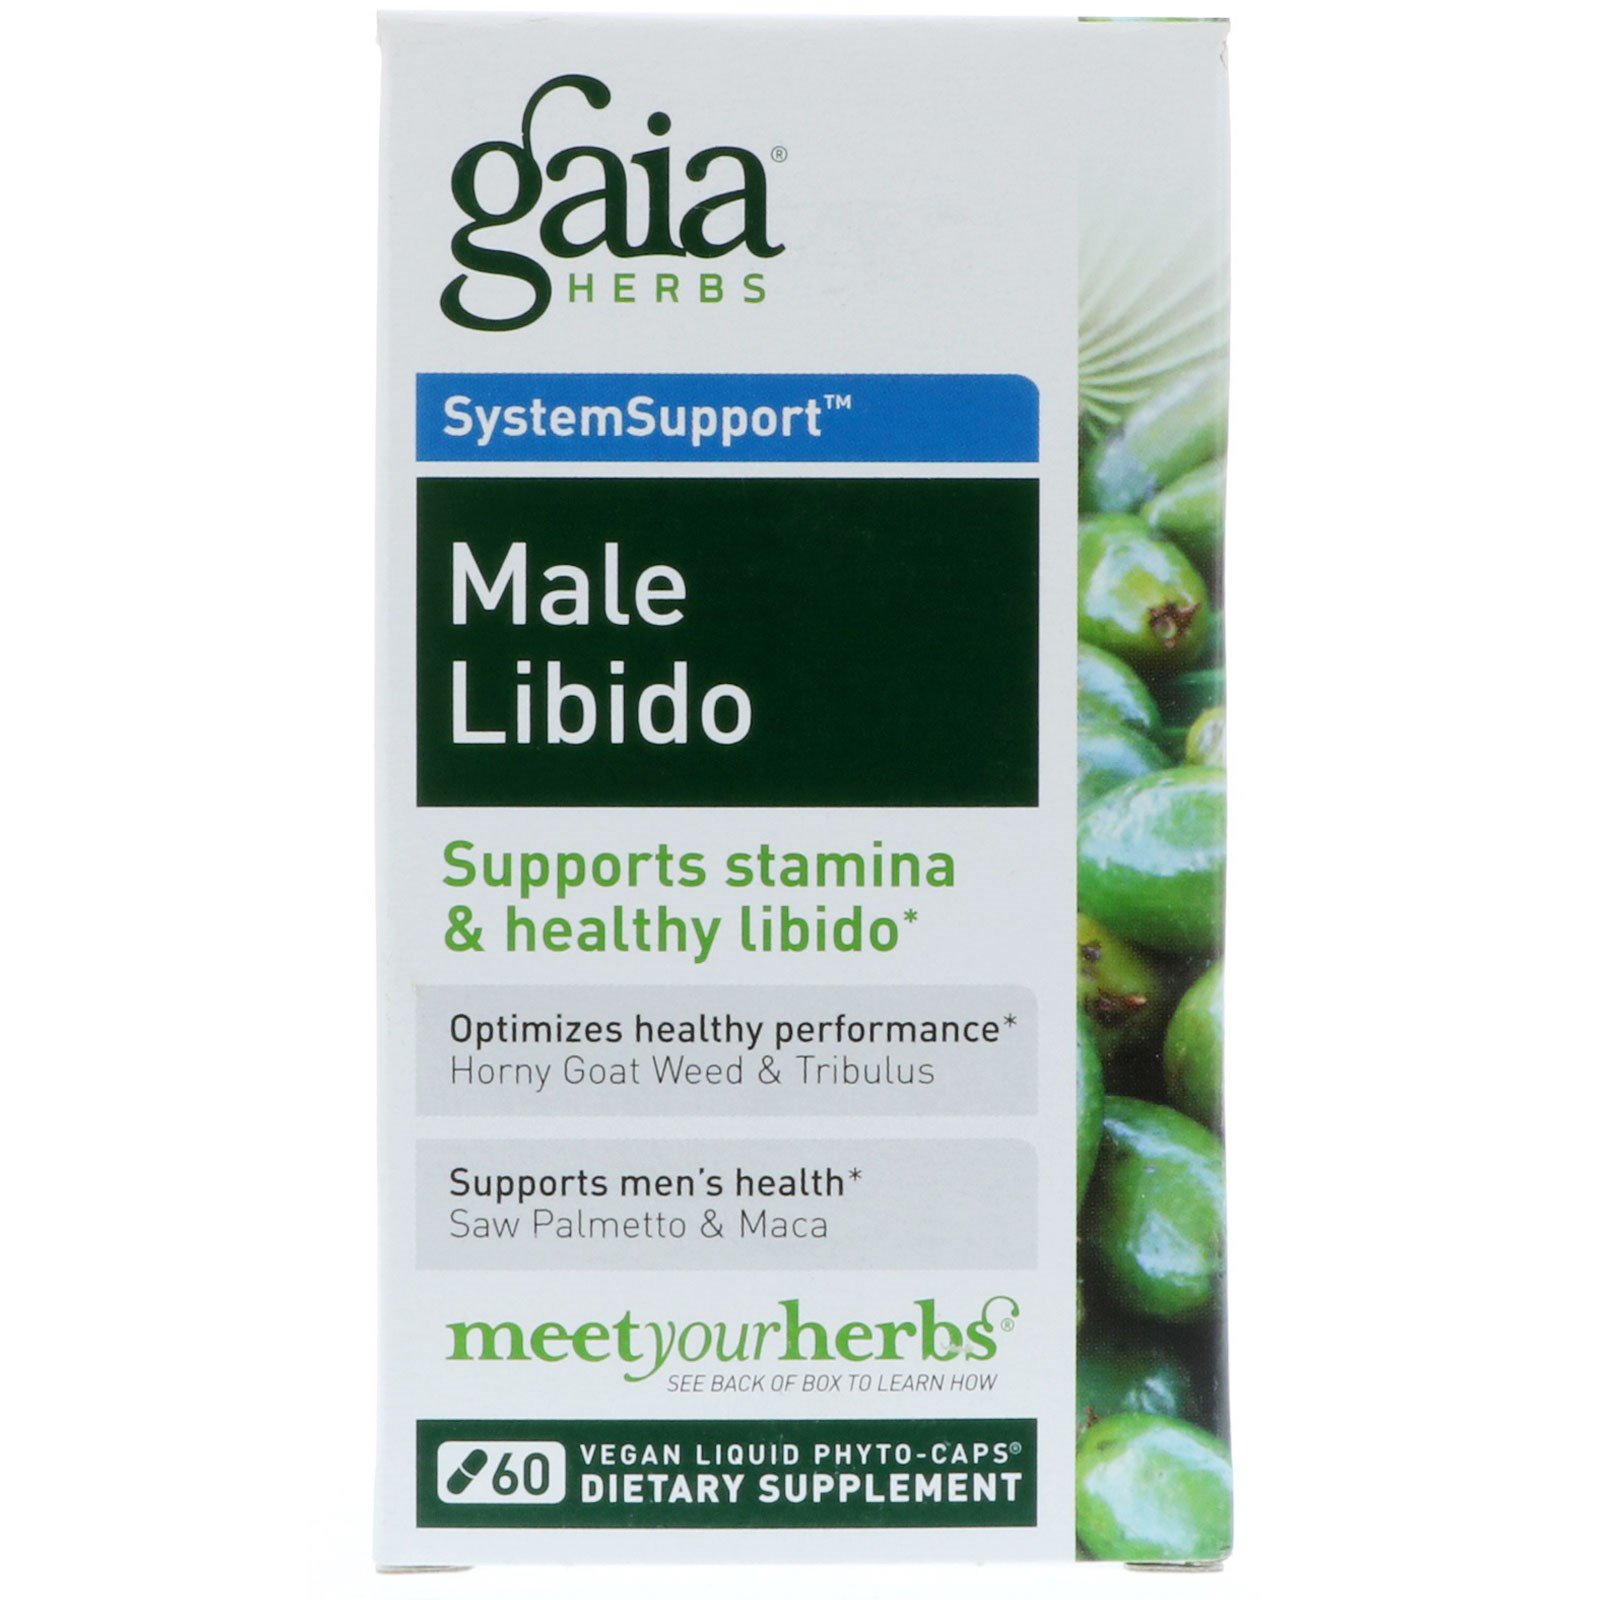 Gaia Herbs, SystemSupport, Male Libido, 60 Vegan Liquid Phyto-Caps